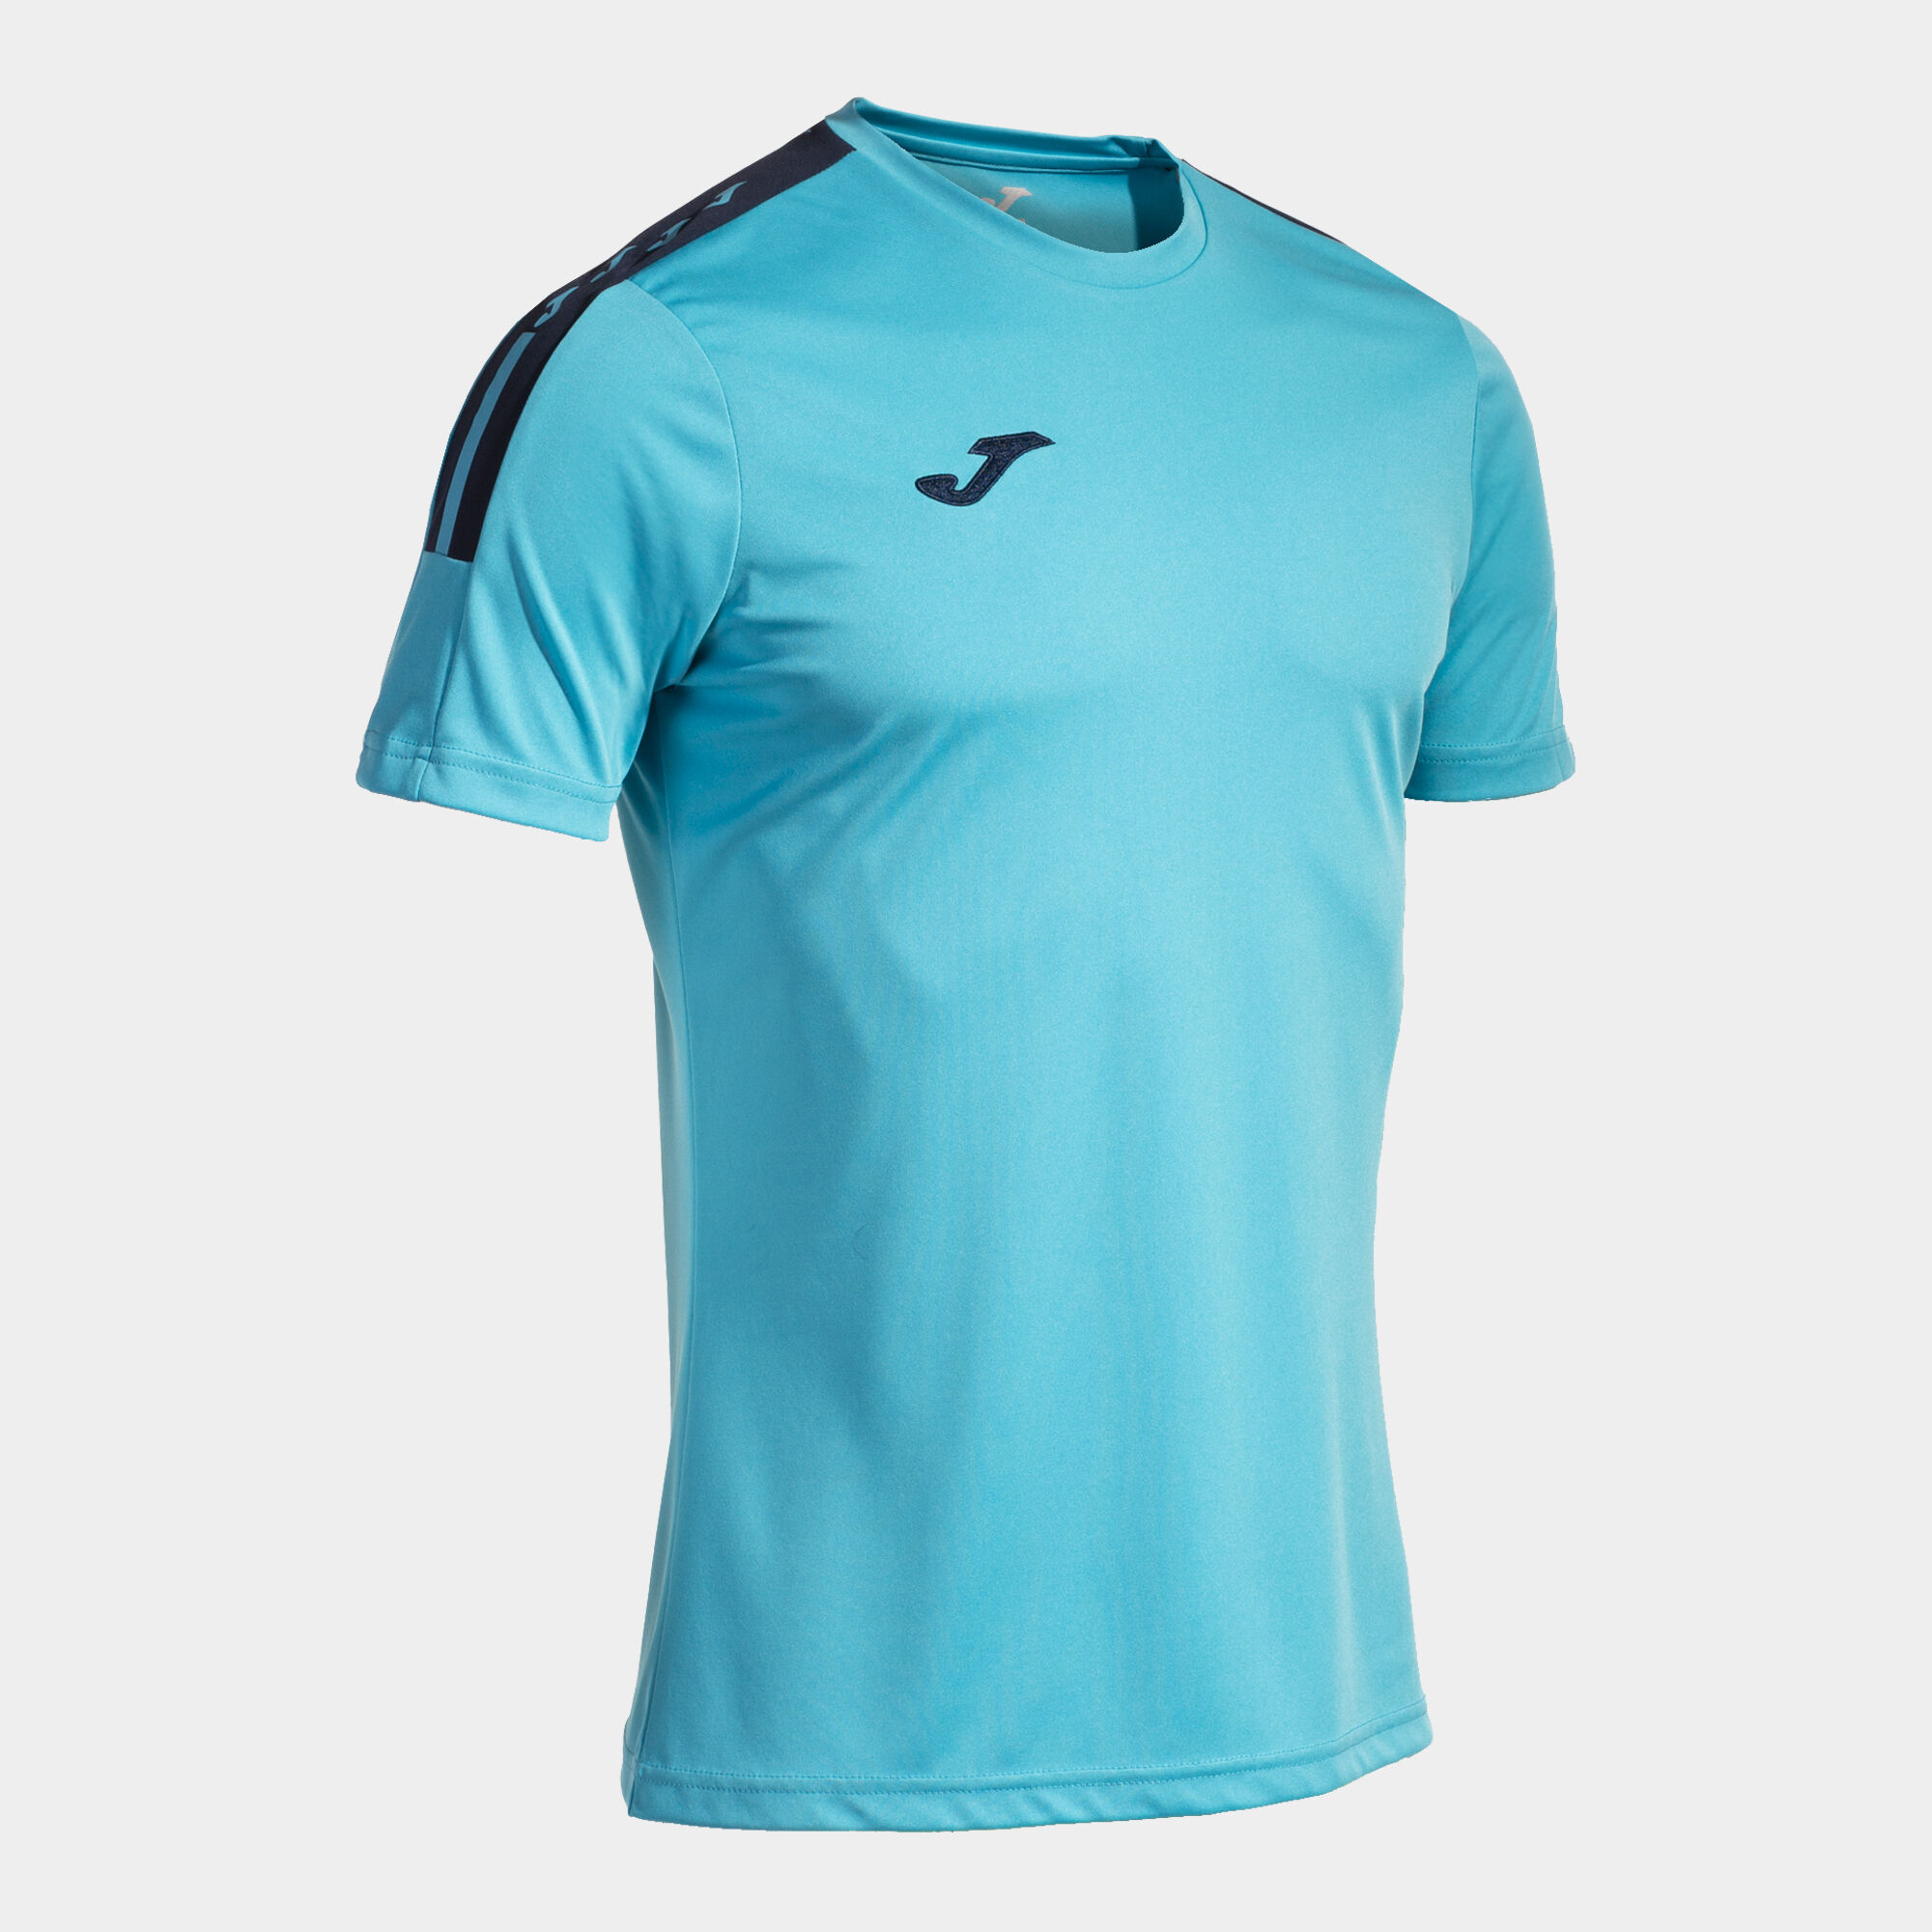 Shirt short sleeve man Olimpiada fluorescent turquoise navy blue